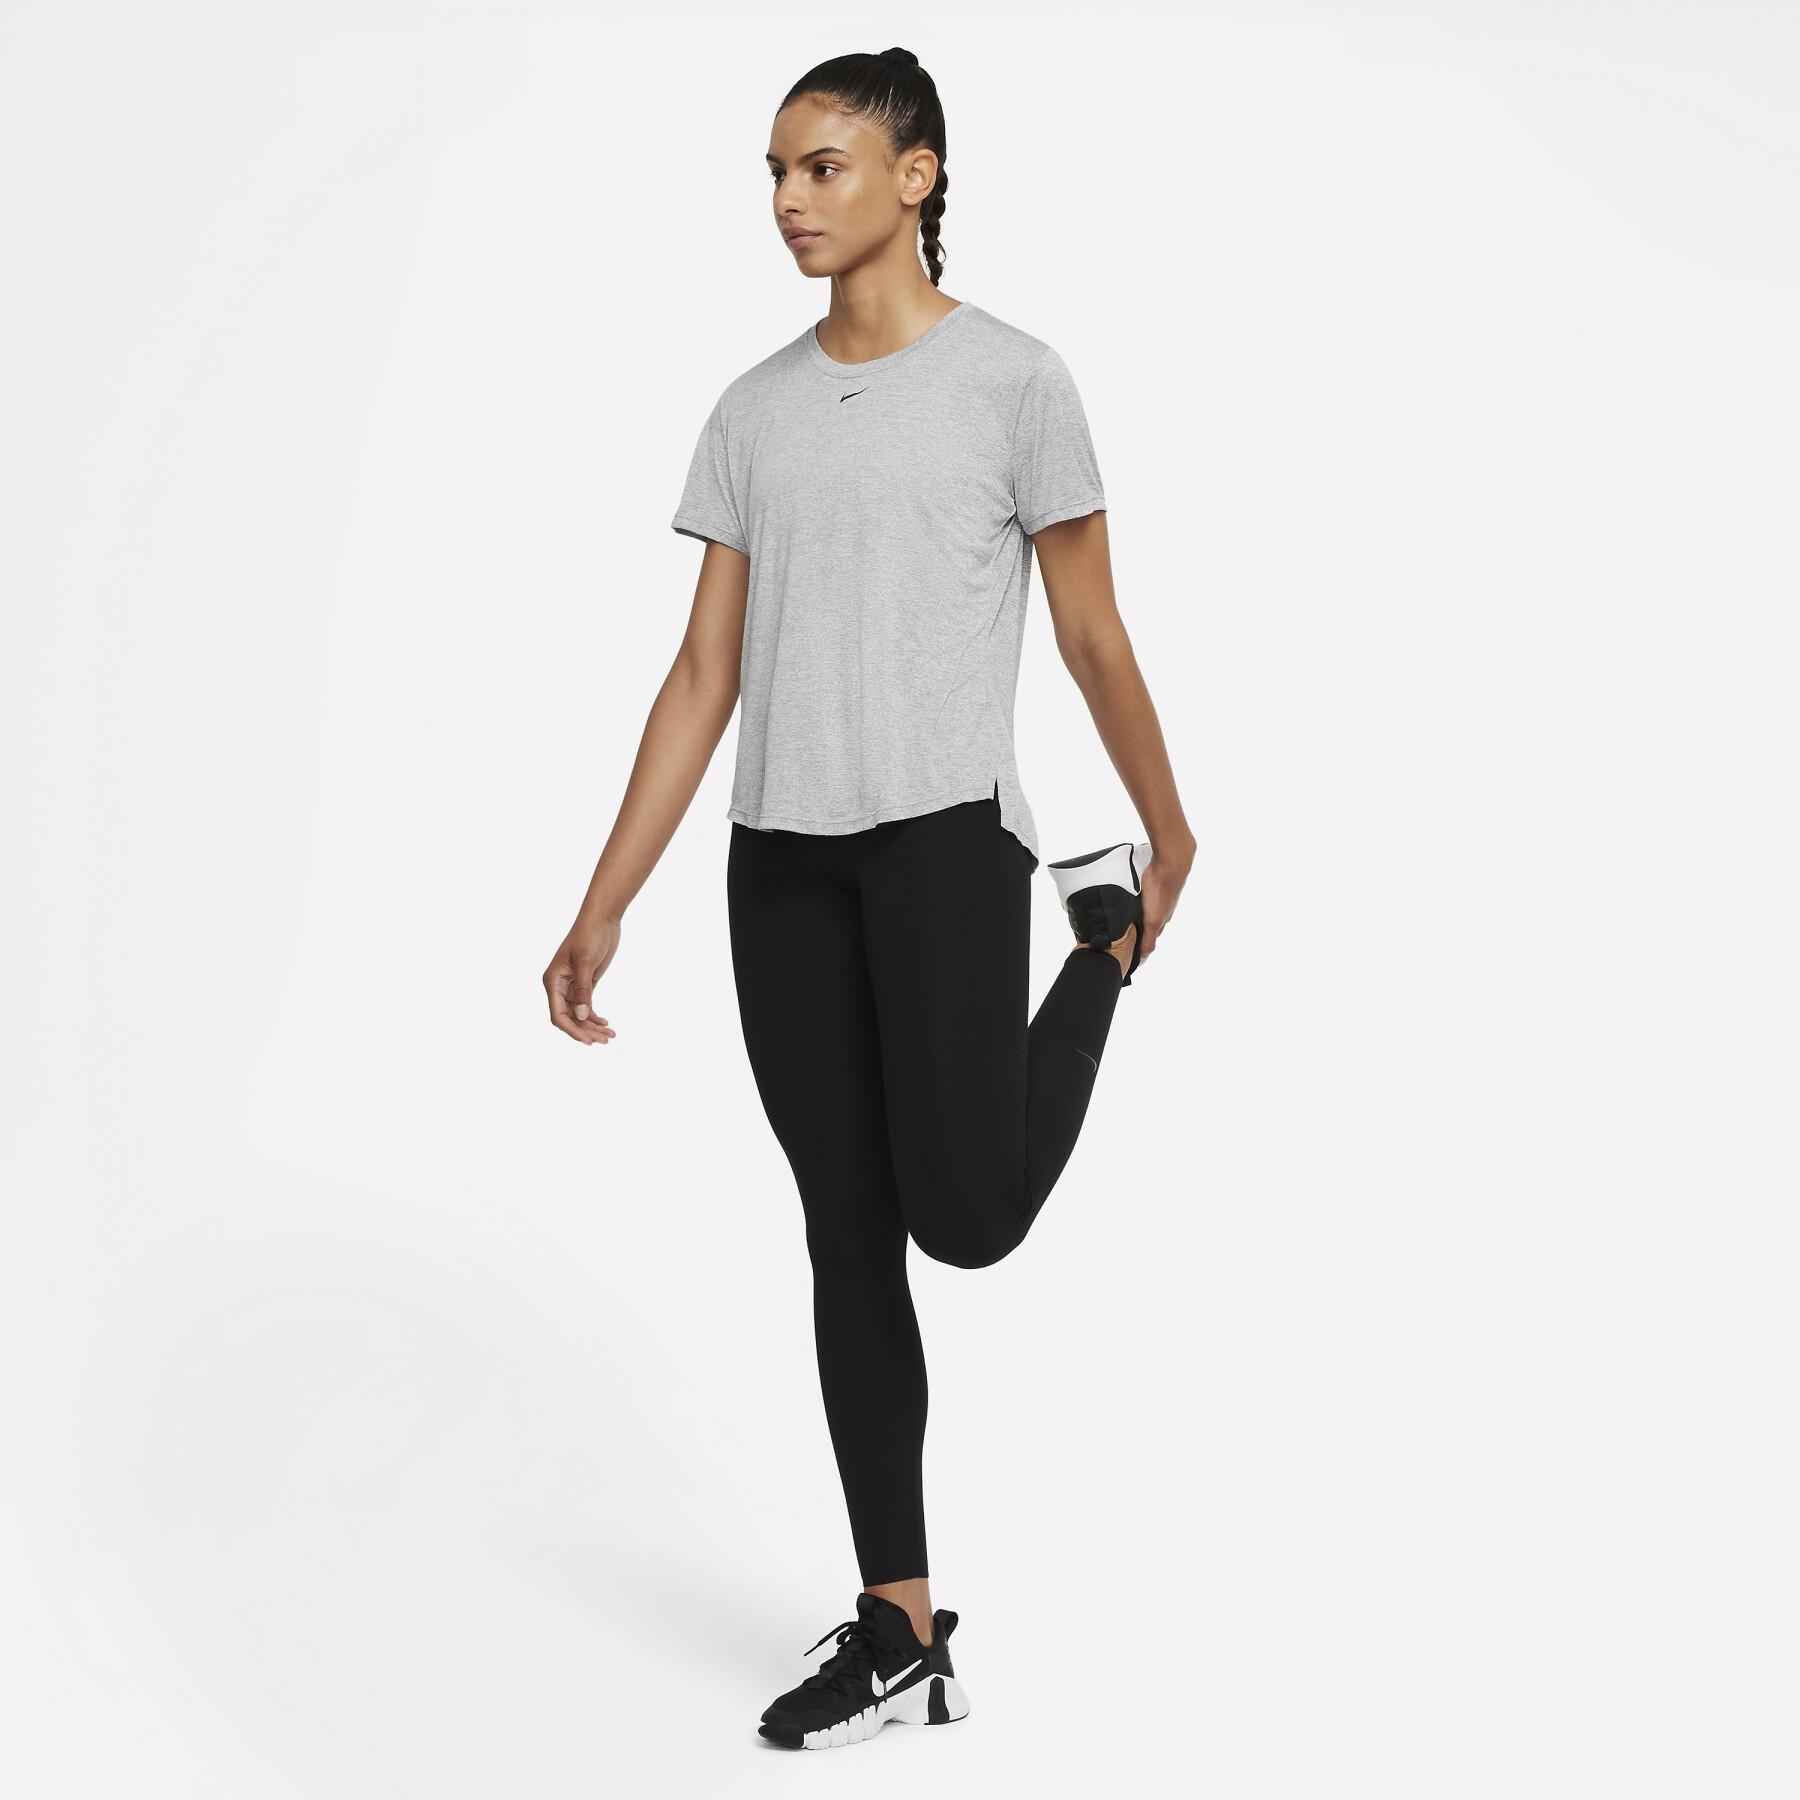 Maillot femme Nike One Dri-Fit STD